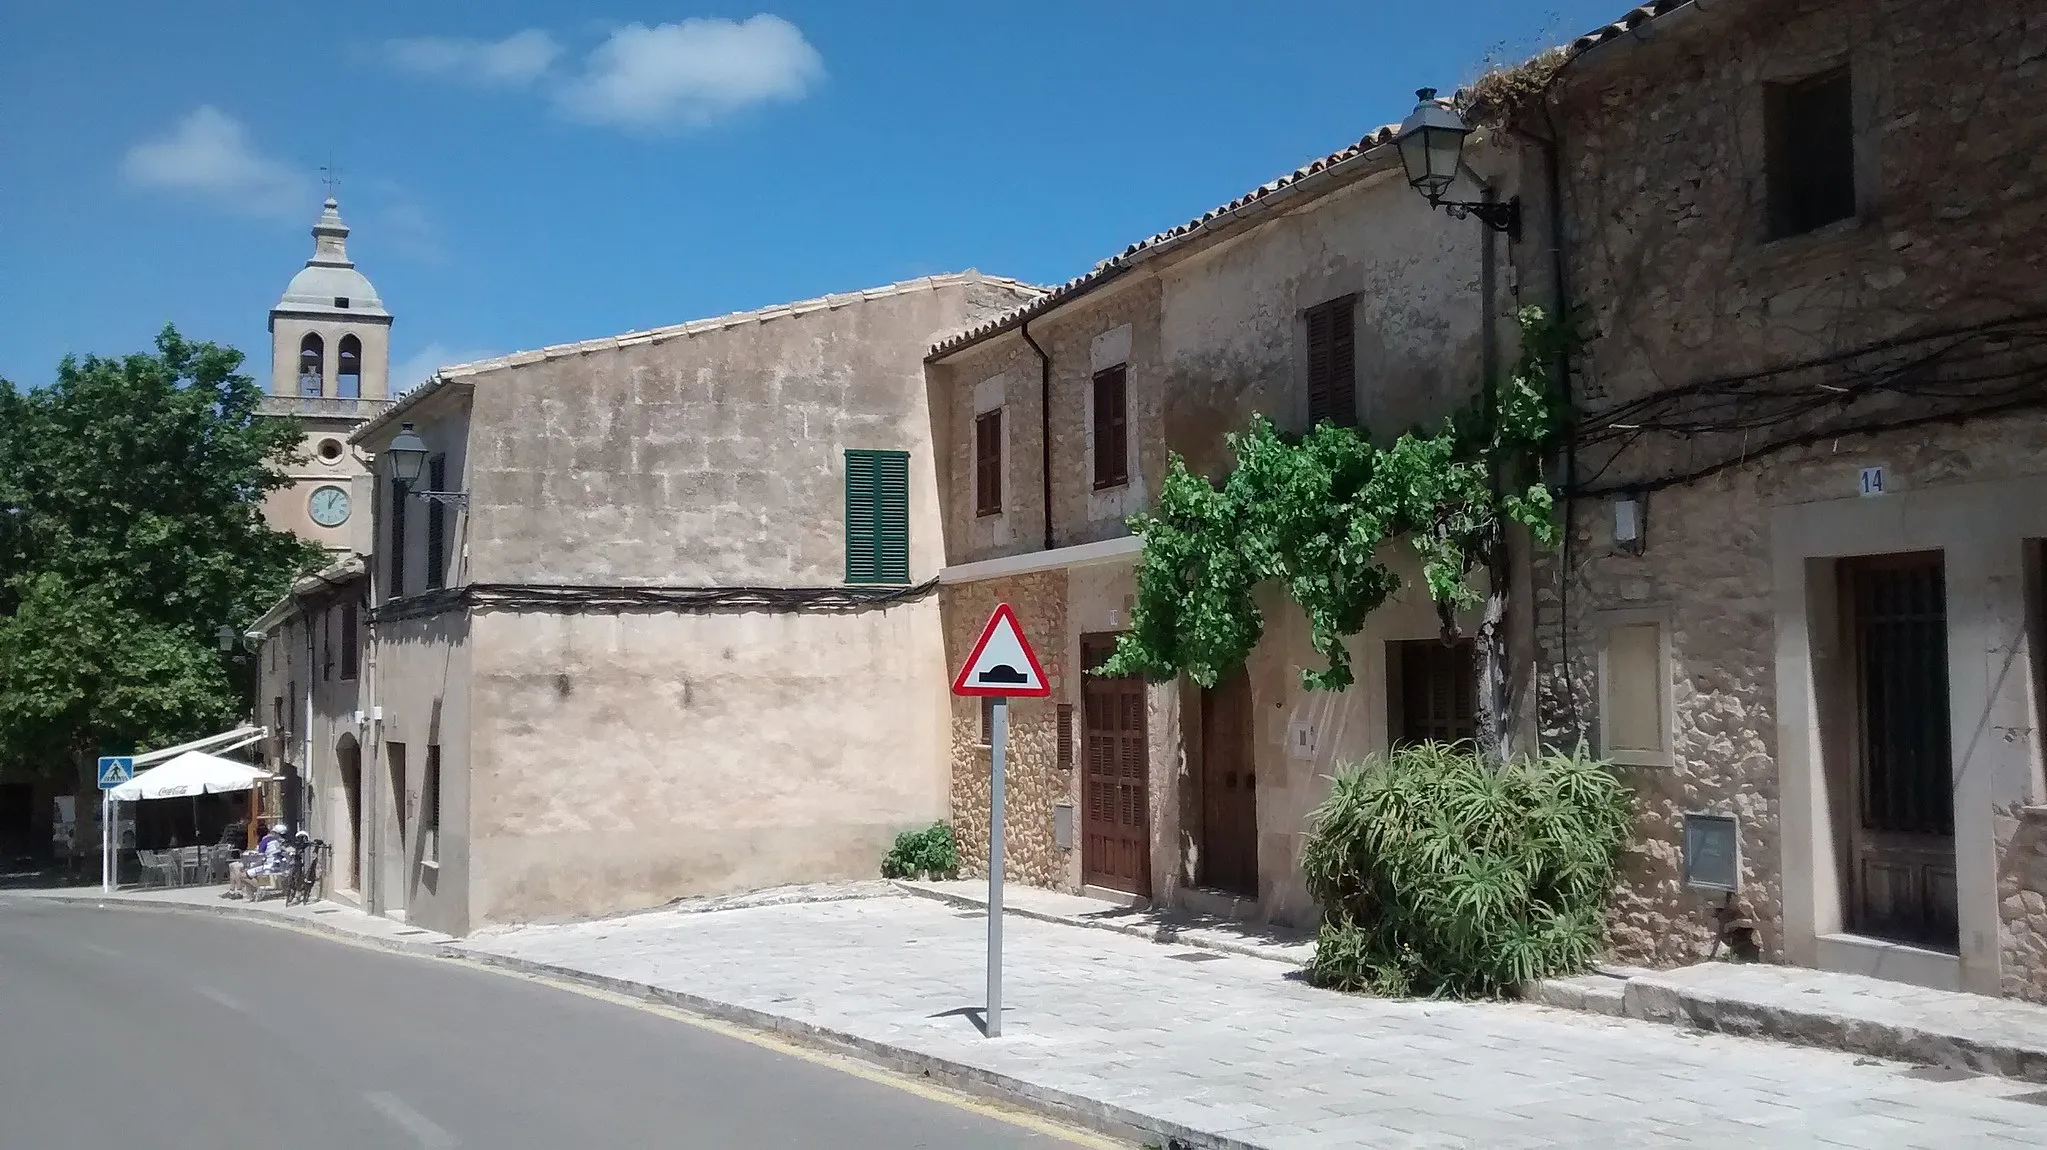 Photo showing: The town of Randa, Mallorca.